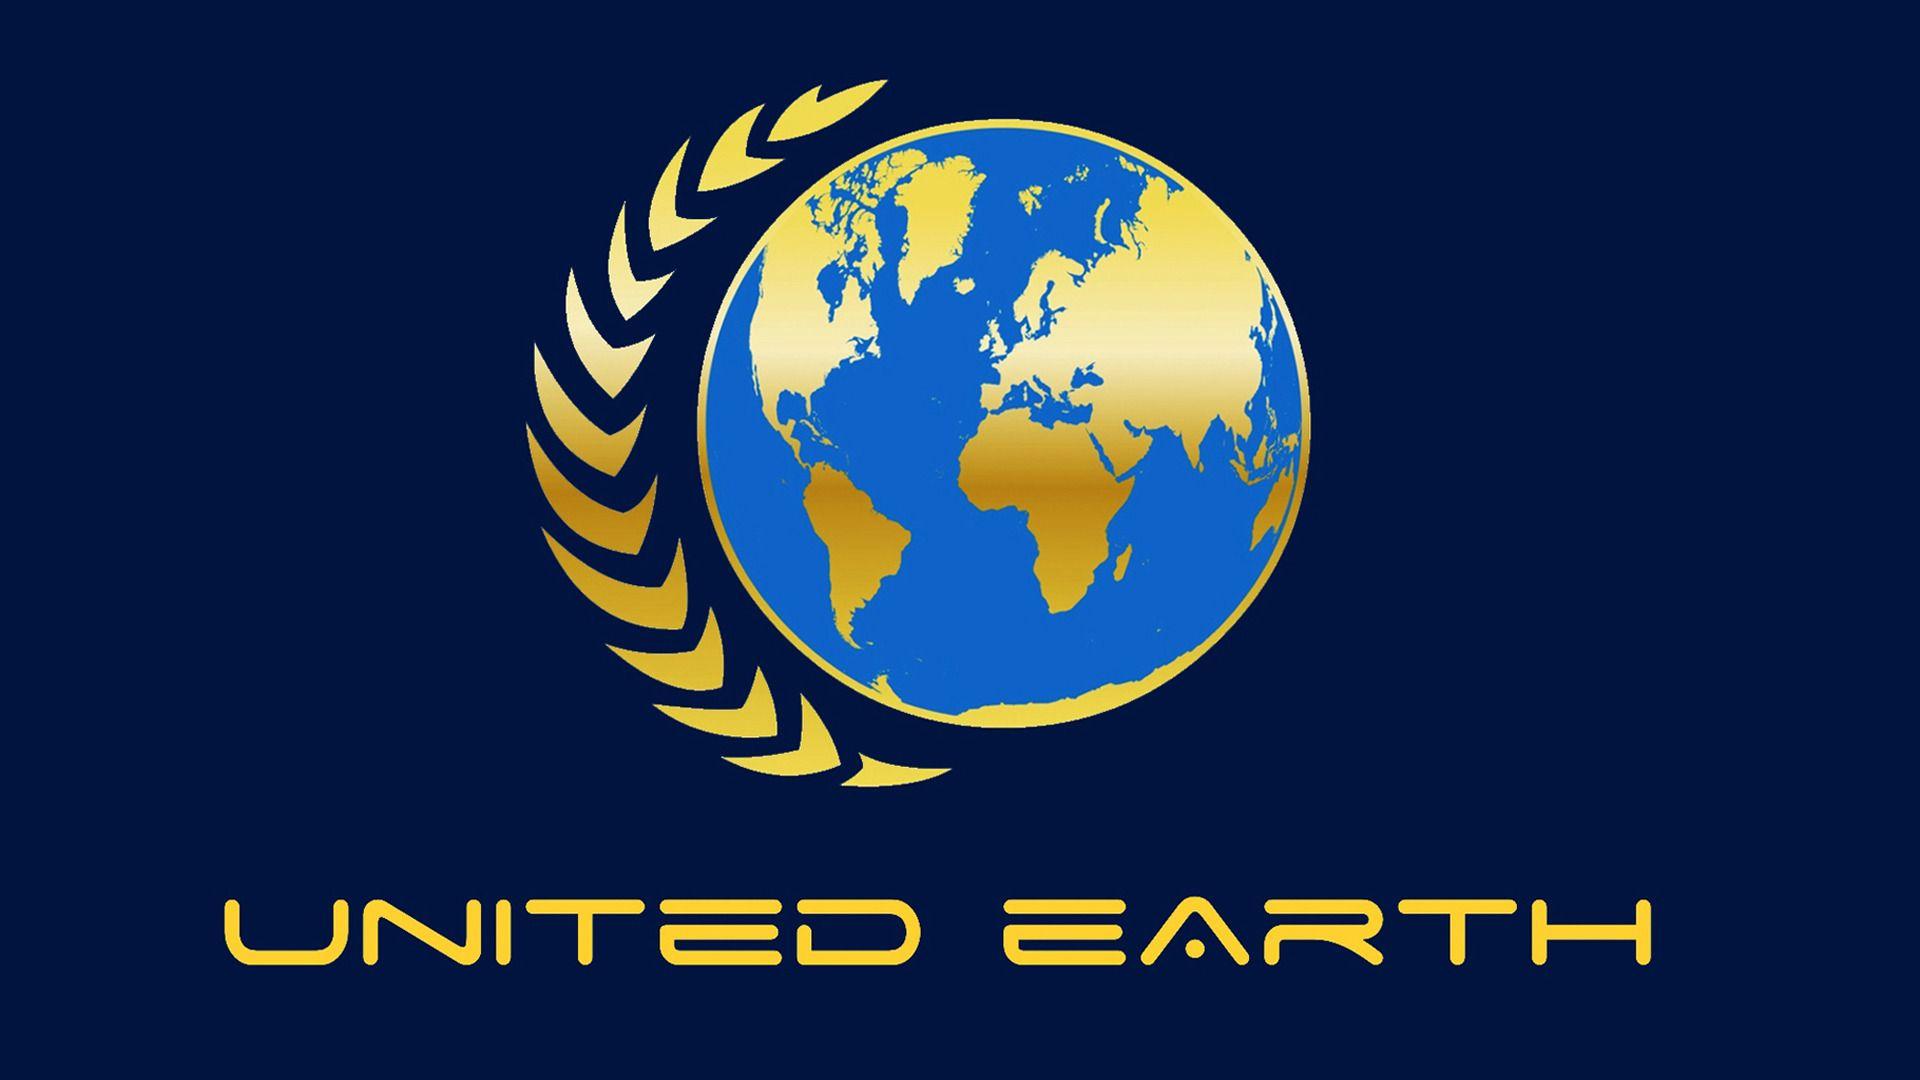 United Earth Logo - United Earth Logo Wallpaper #990 - Cliparts.co